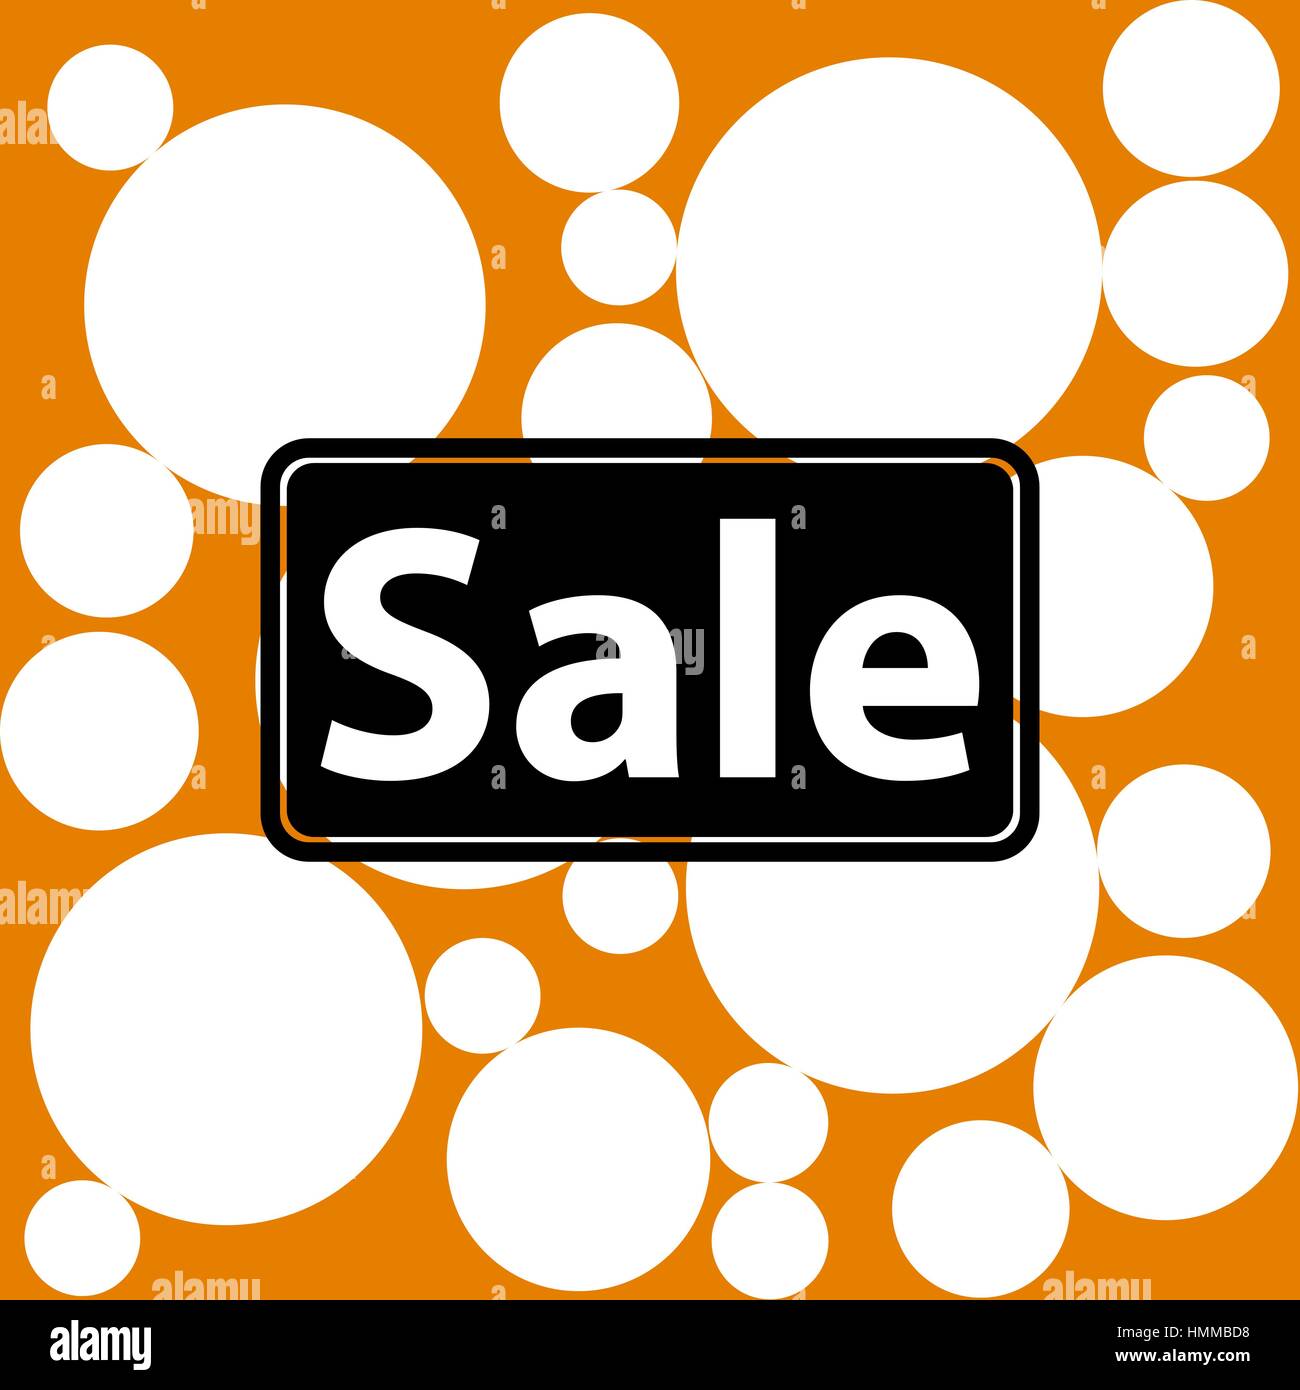 Sale tag black rectangle, square banner, billboard. Autumn fall season Sleek design. Orange background with circles. Vector illustration Stock Vector